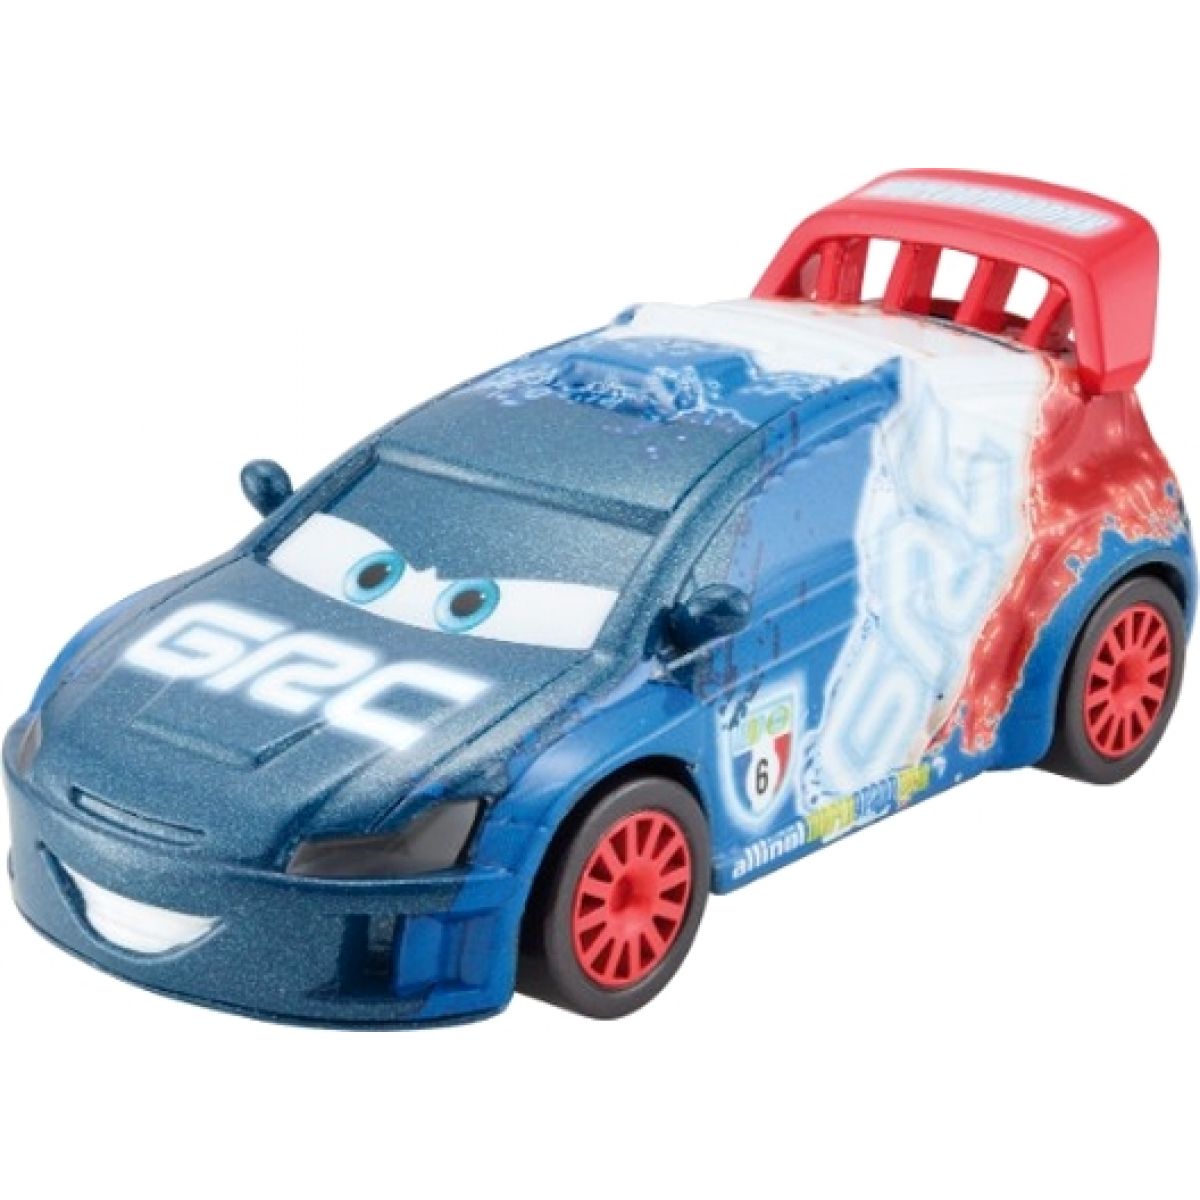 Mattel Cars Auta Neon - Raul Caroule